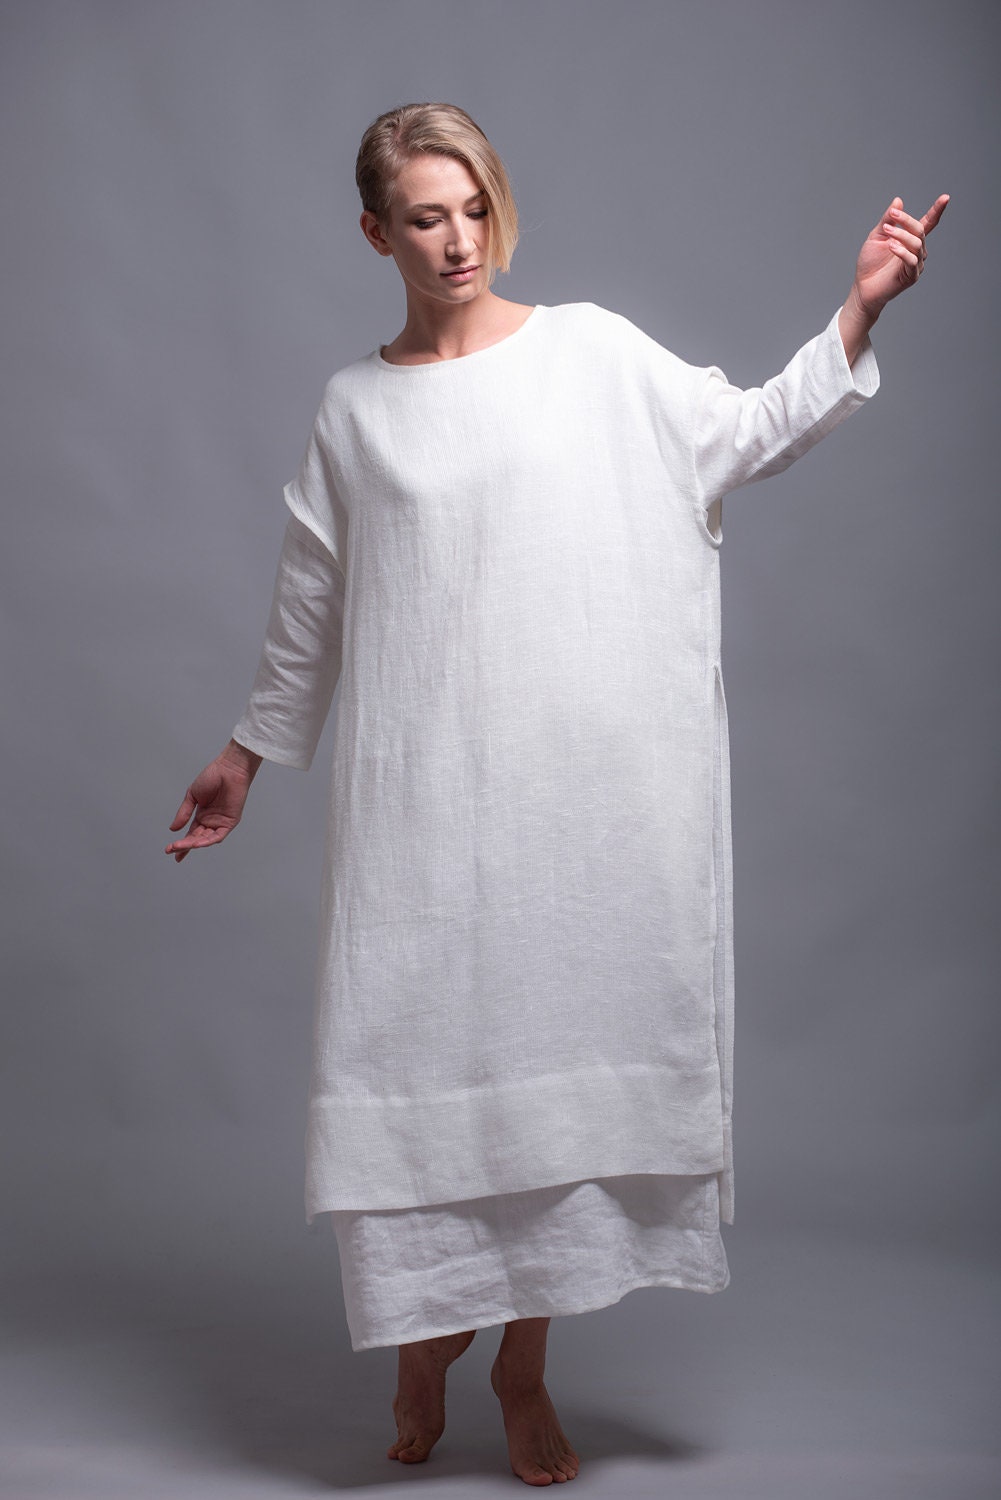 White Linen Tunic Dress SANGA Viking Wedding White Dress | Etsy